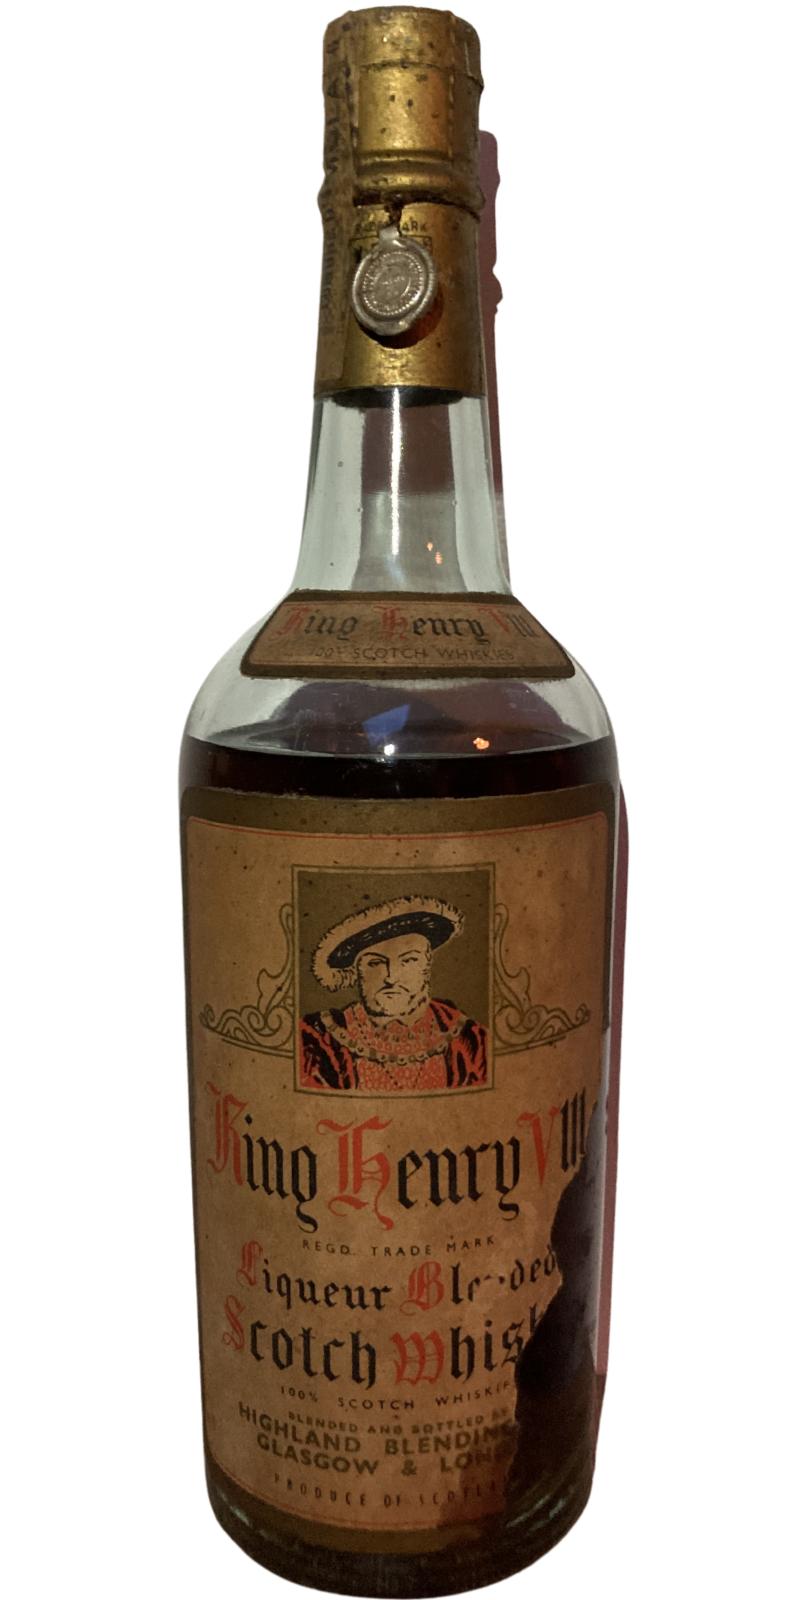 King Henry VIII Liqueur Blended Scotch Whisky